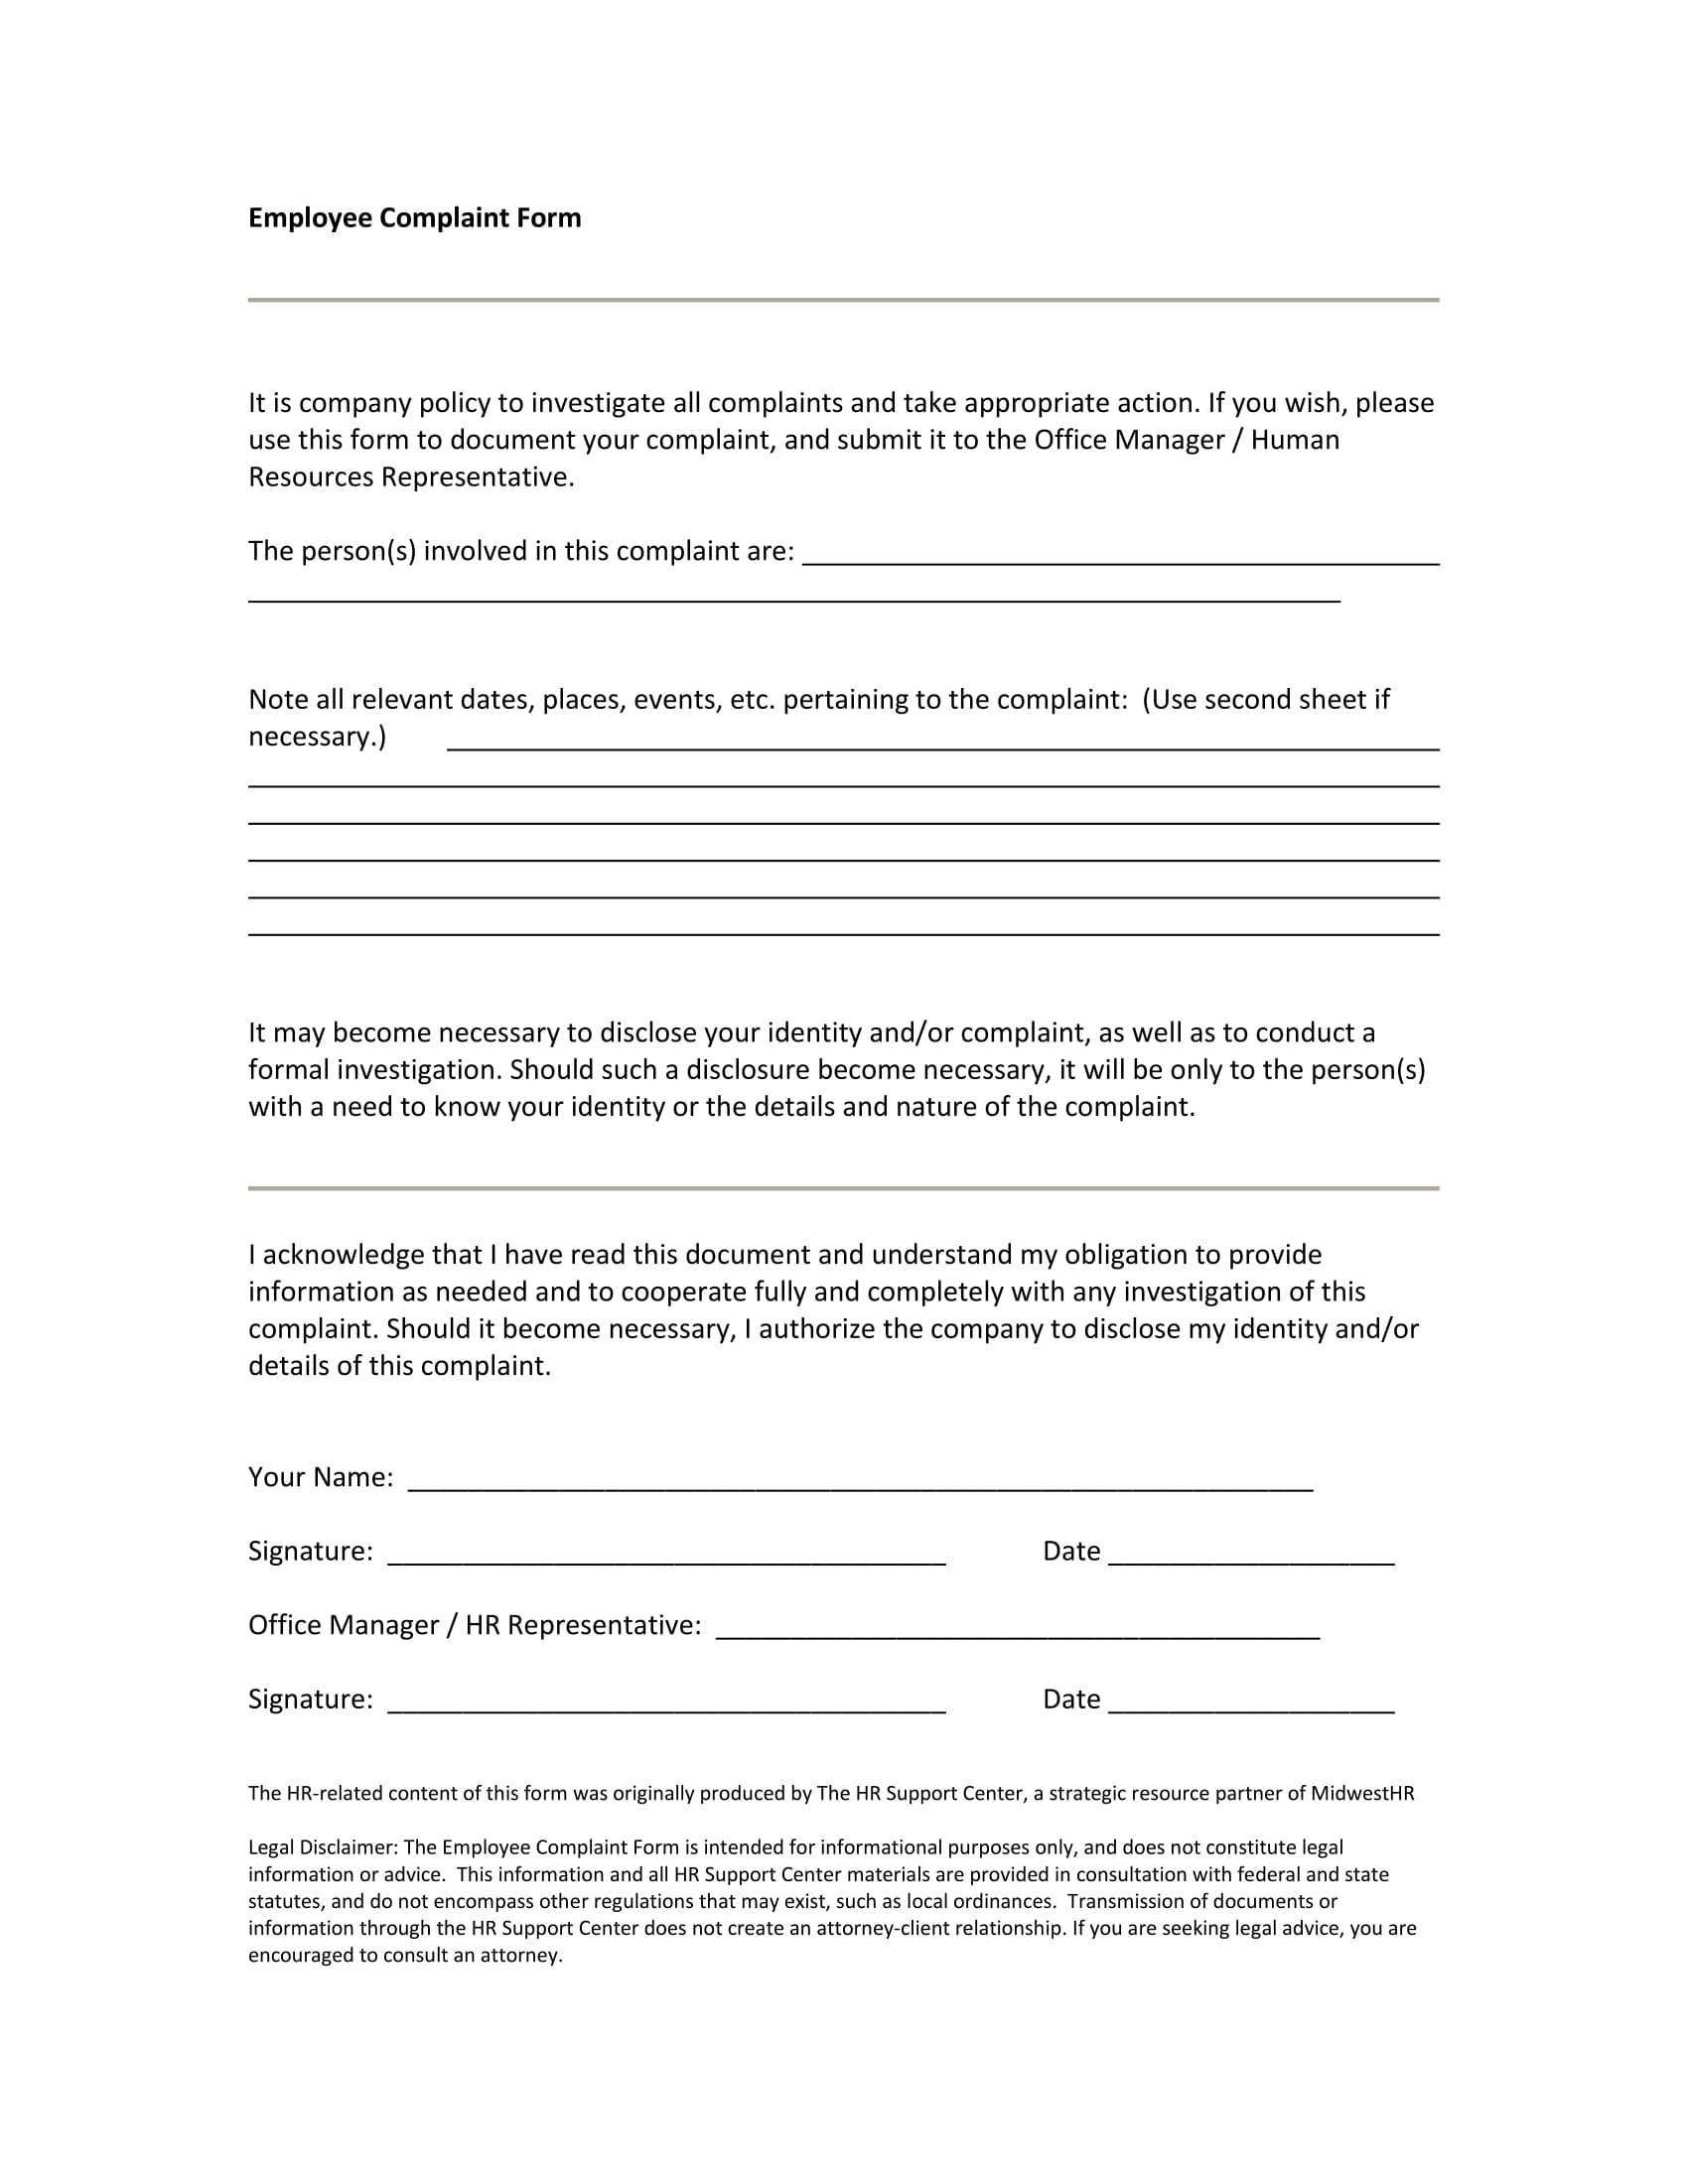 employee complaint investigation form 1